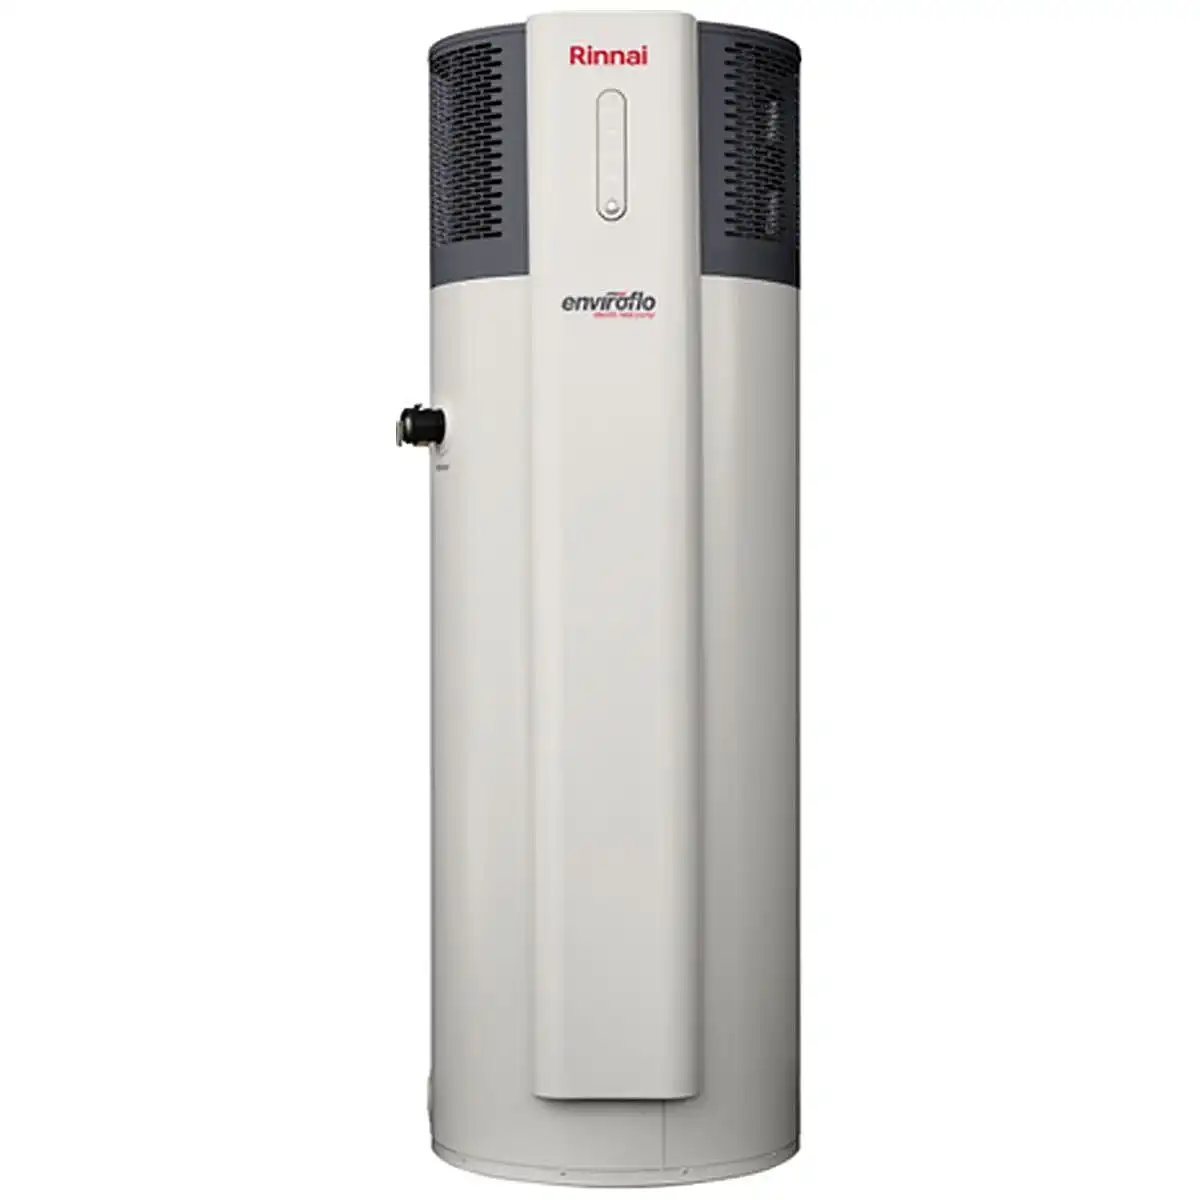 Rinnai V2 250L Enviroflo Heat Pump Hot Water System Hard Water